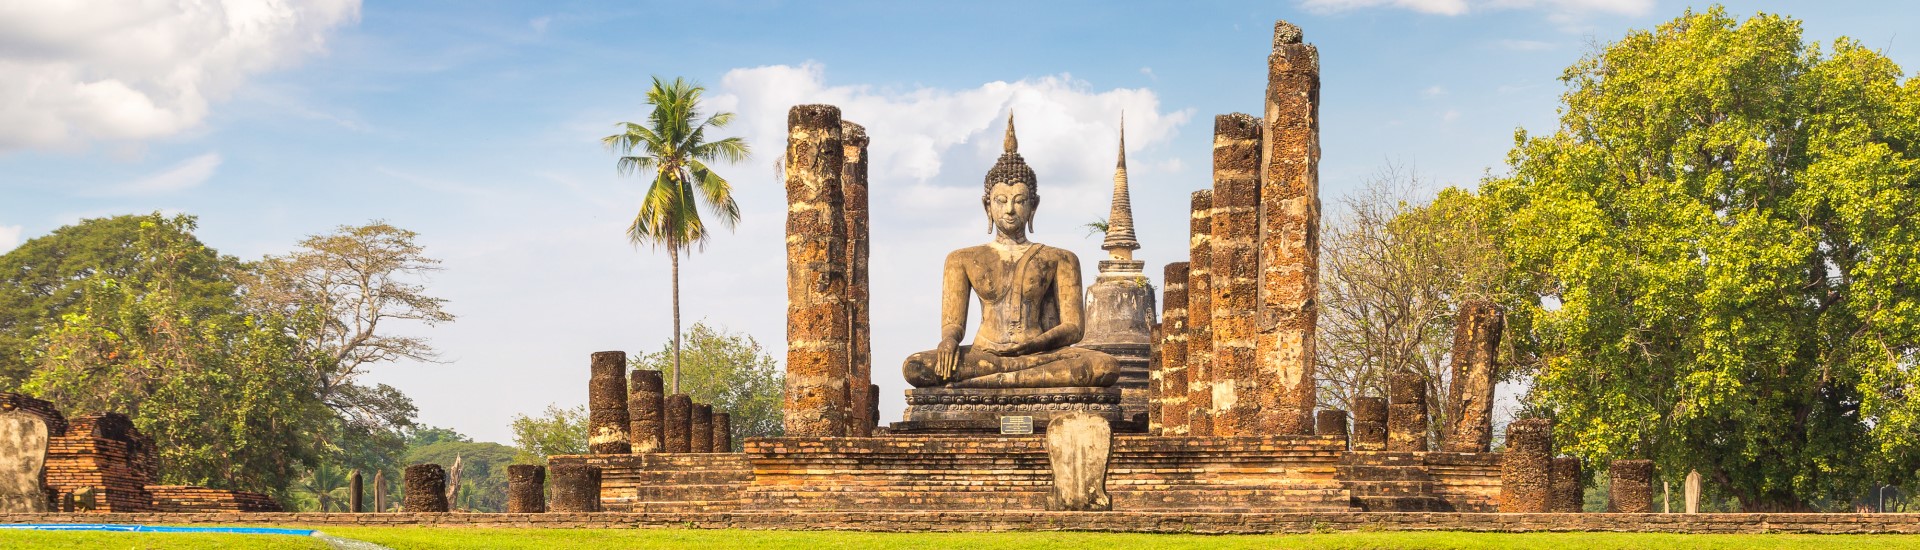 Wat Mahathat temple Buddha statue in Ayutthaya, Thailand